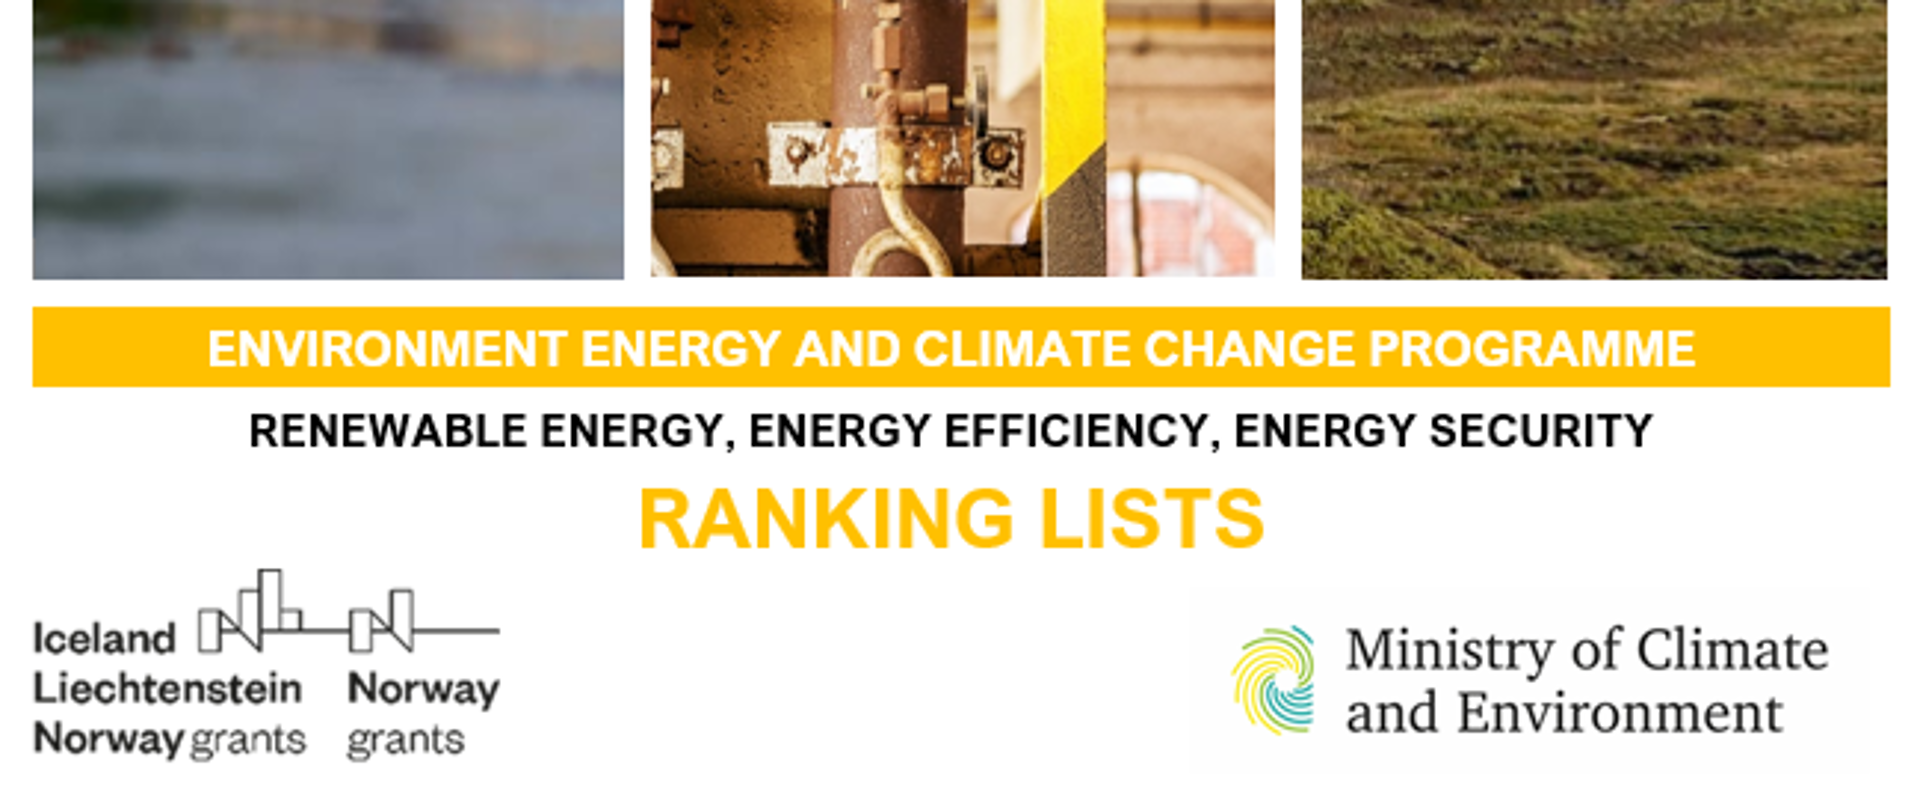 Ranking_lists_energy